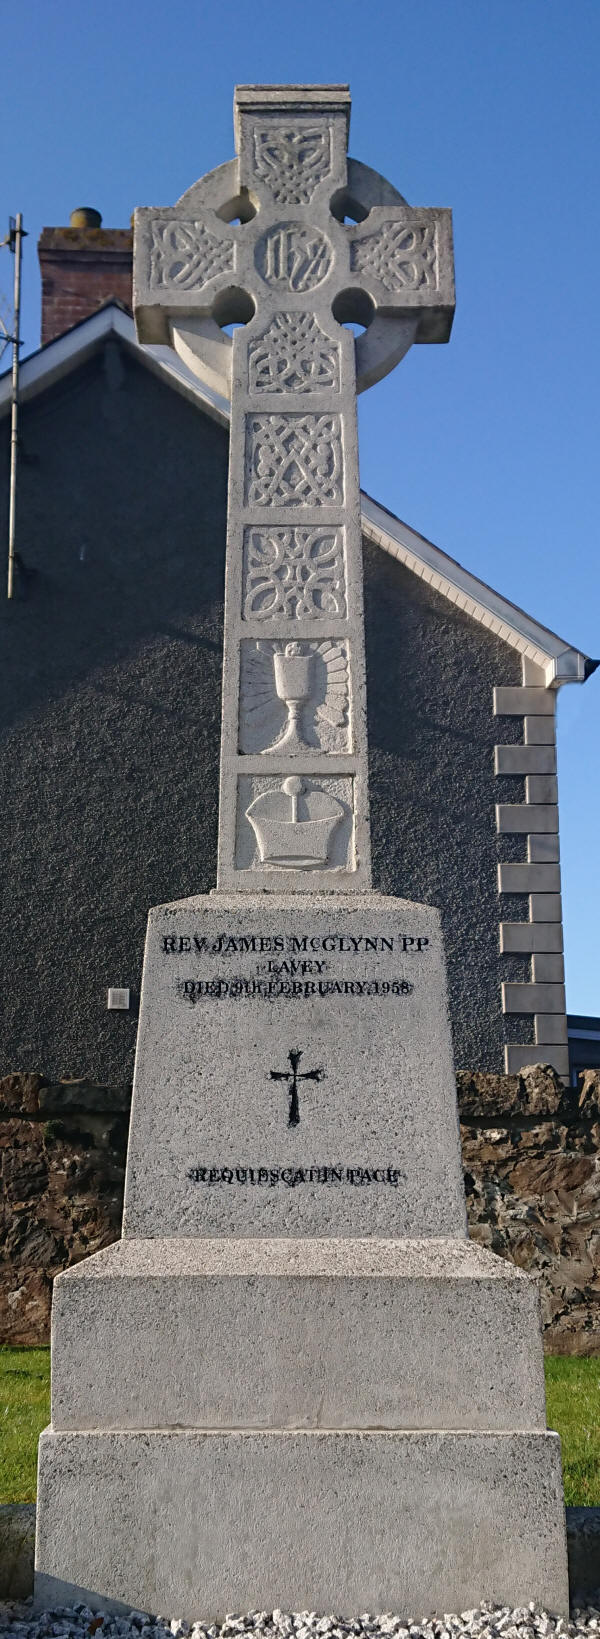 Rev Fr McGlynn PP Lavey THe Chapel Lavey Parish Co Derry Ireland